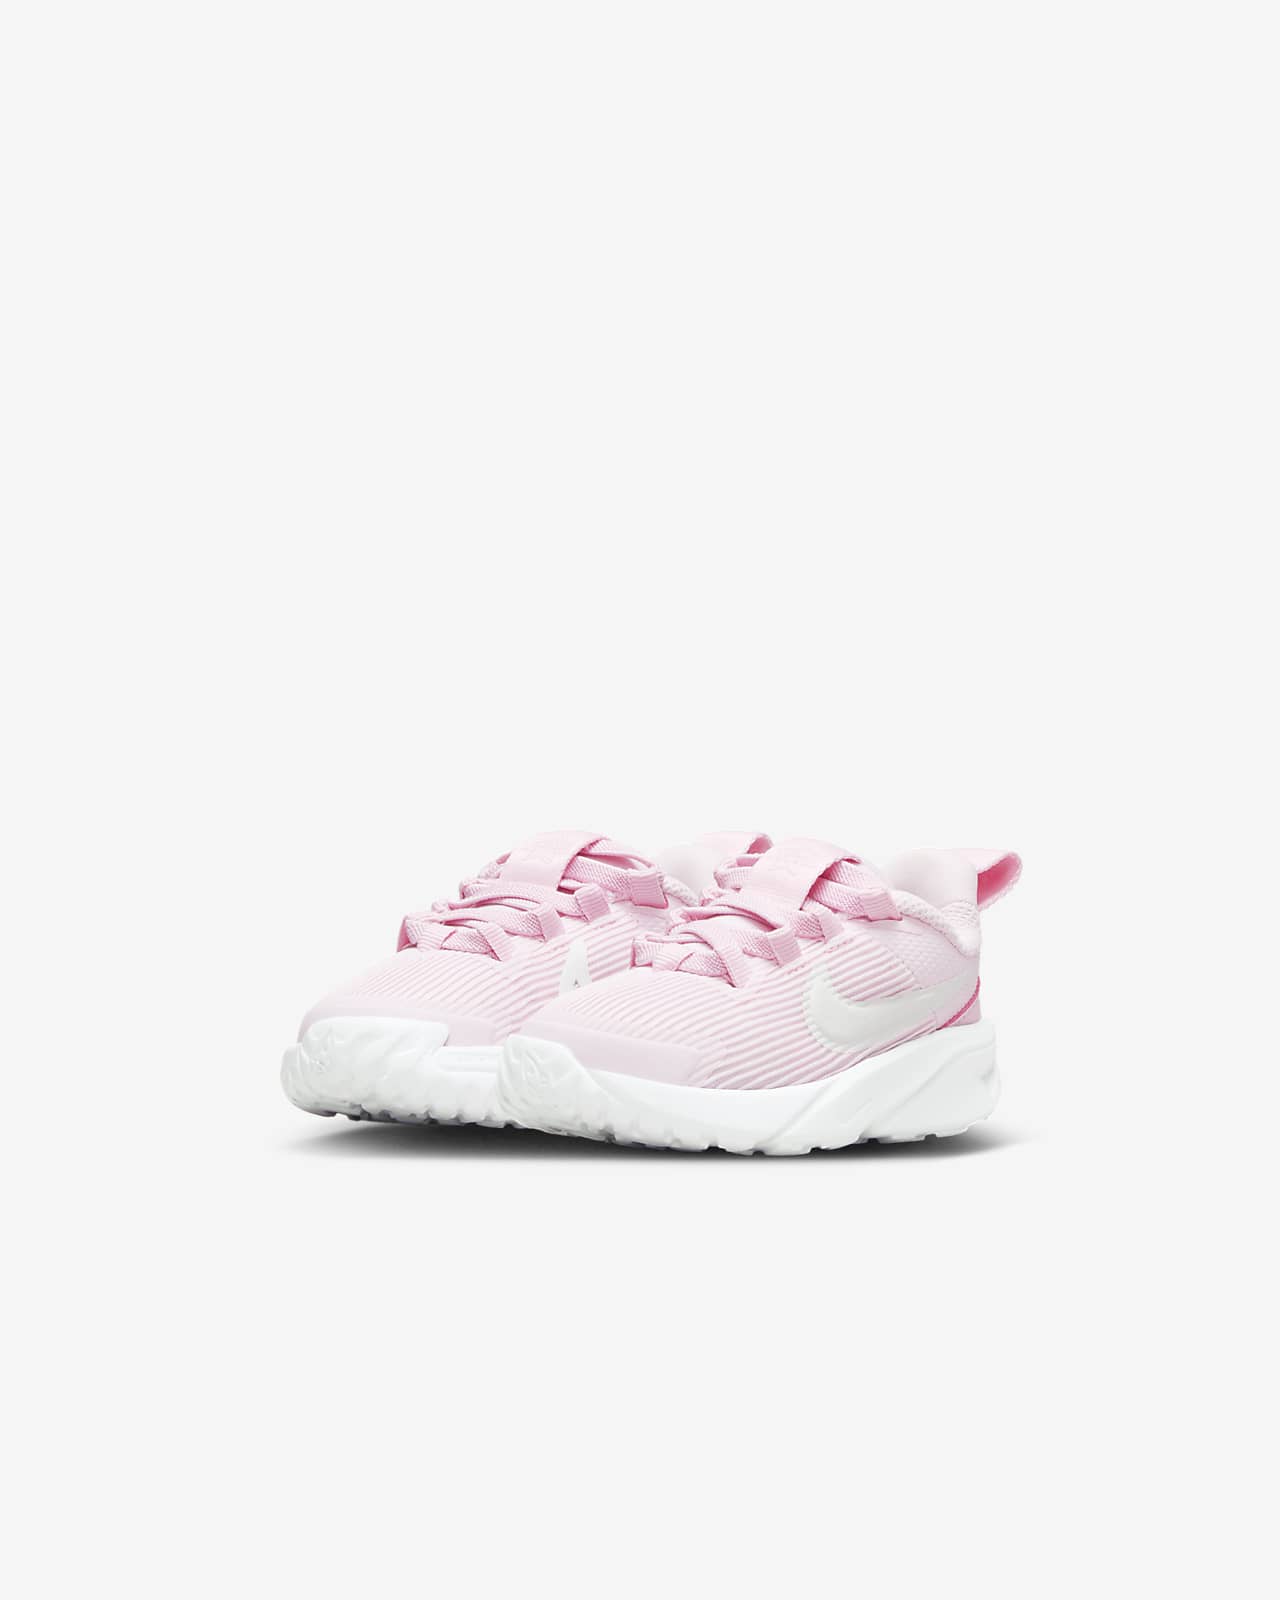 Runner Nike 4 Star Baby/Toddler Shoes.